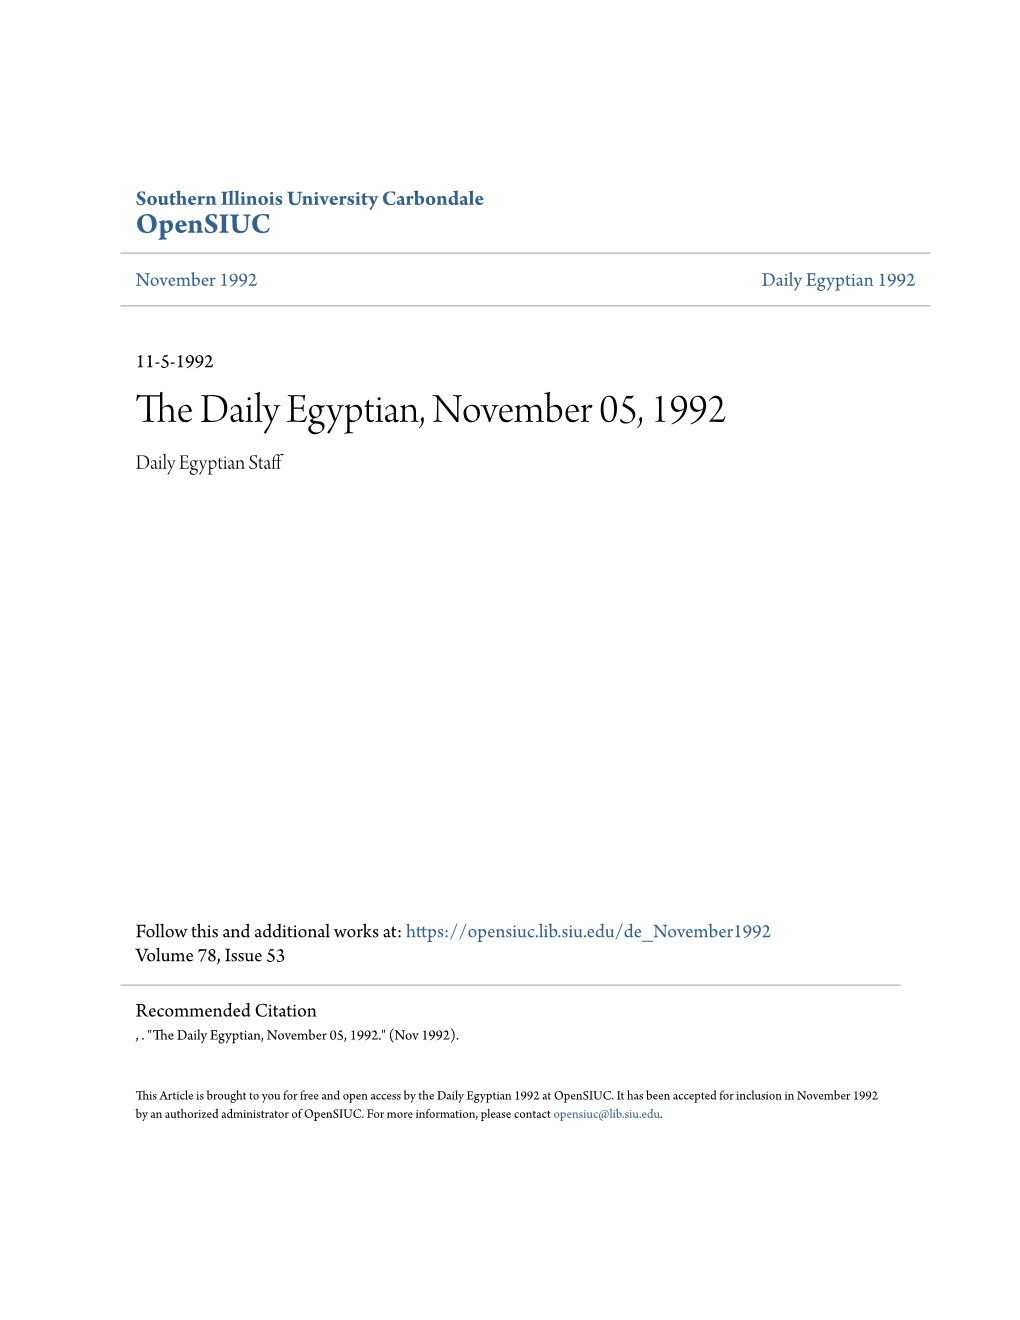 The Daily Egyptian, November 05, 1992